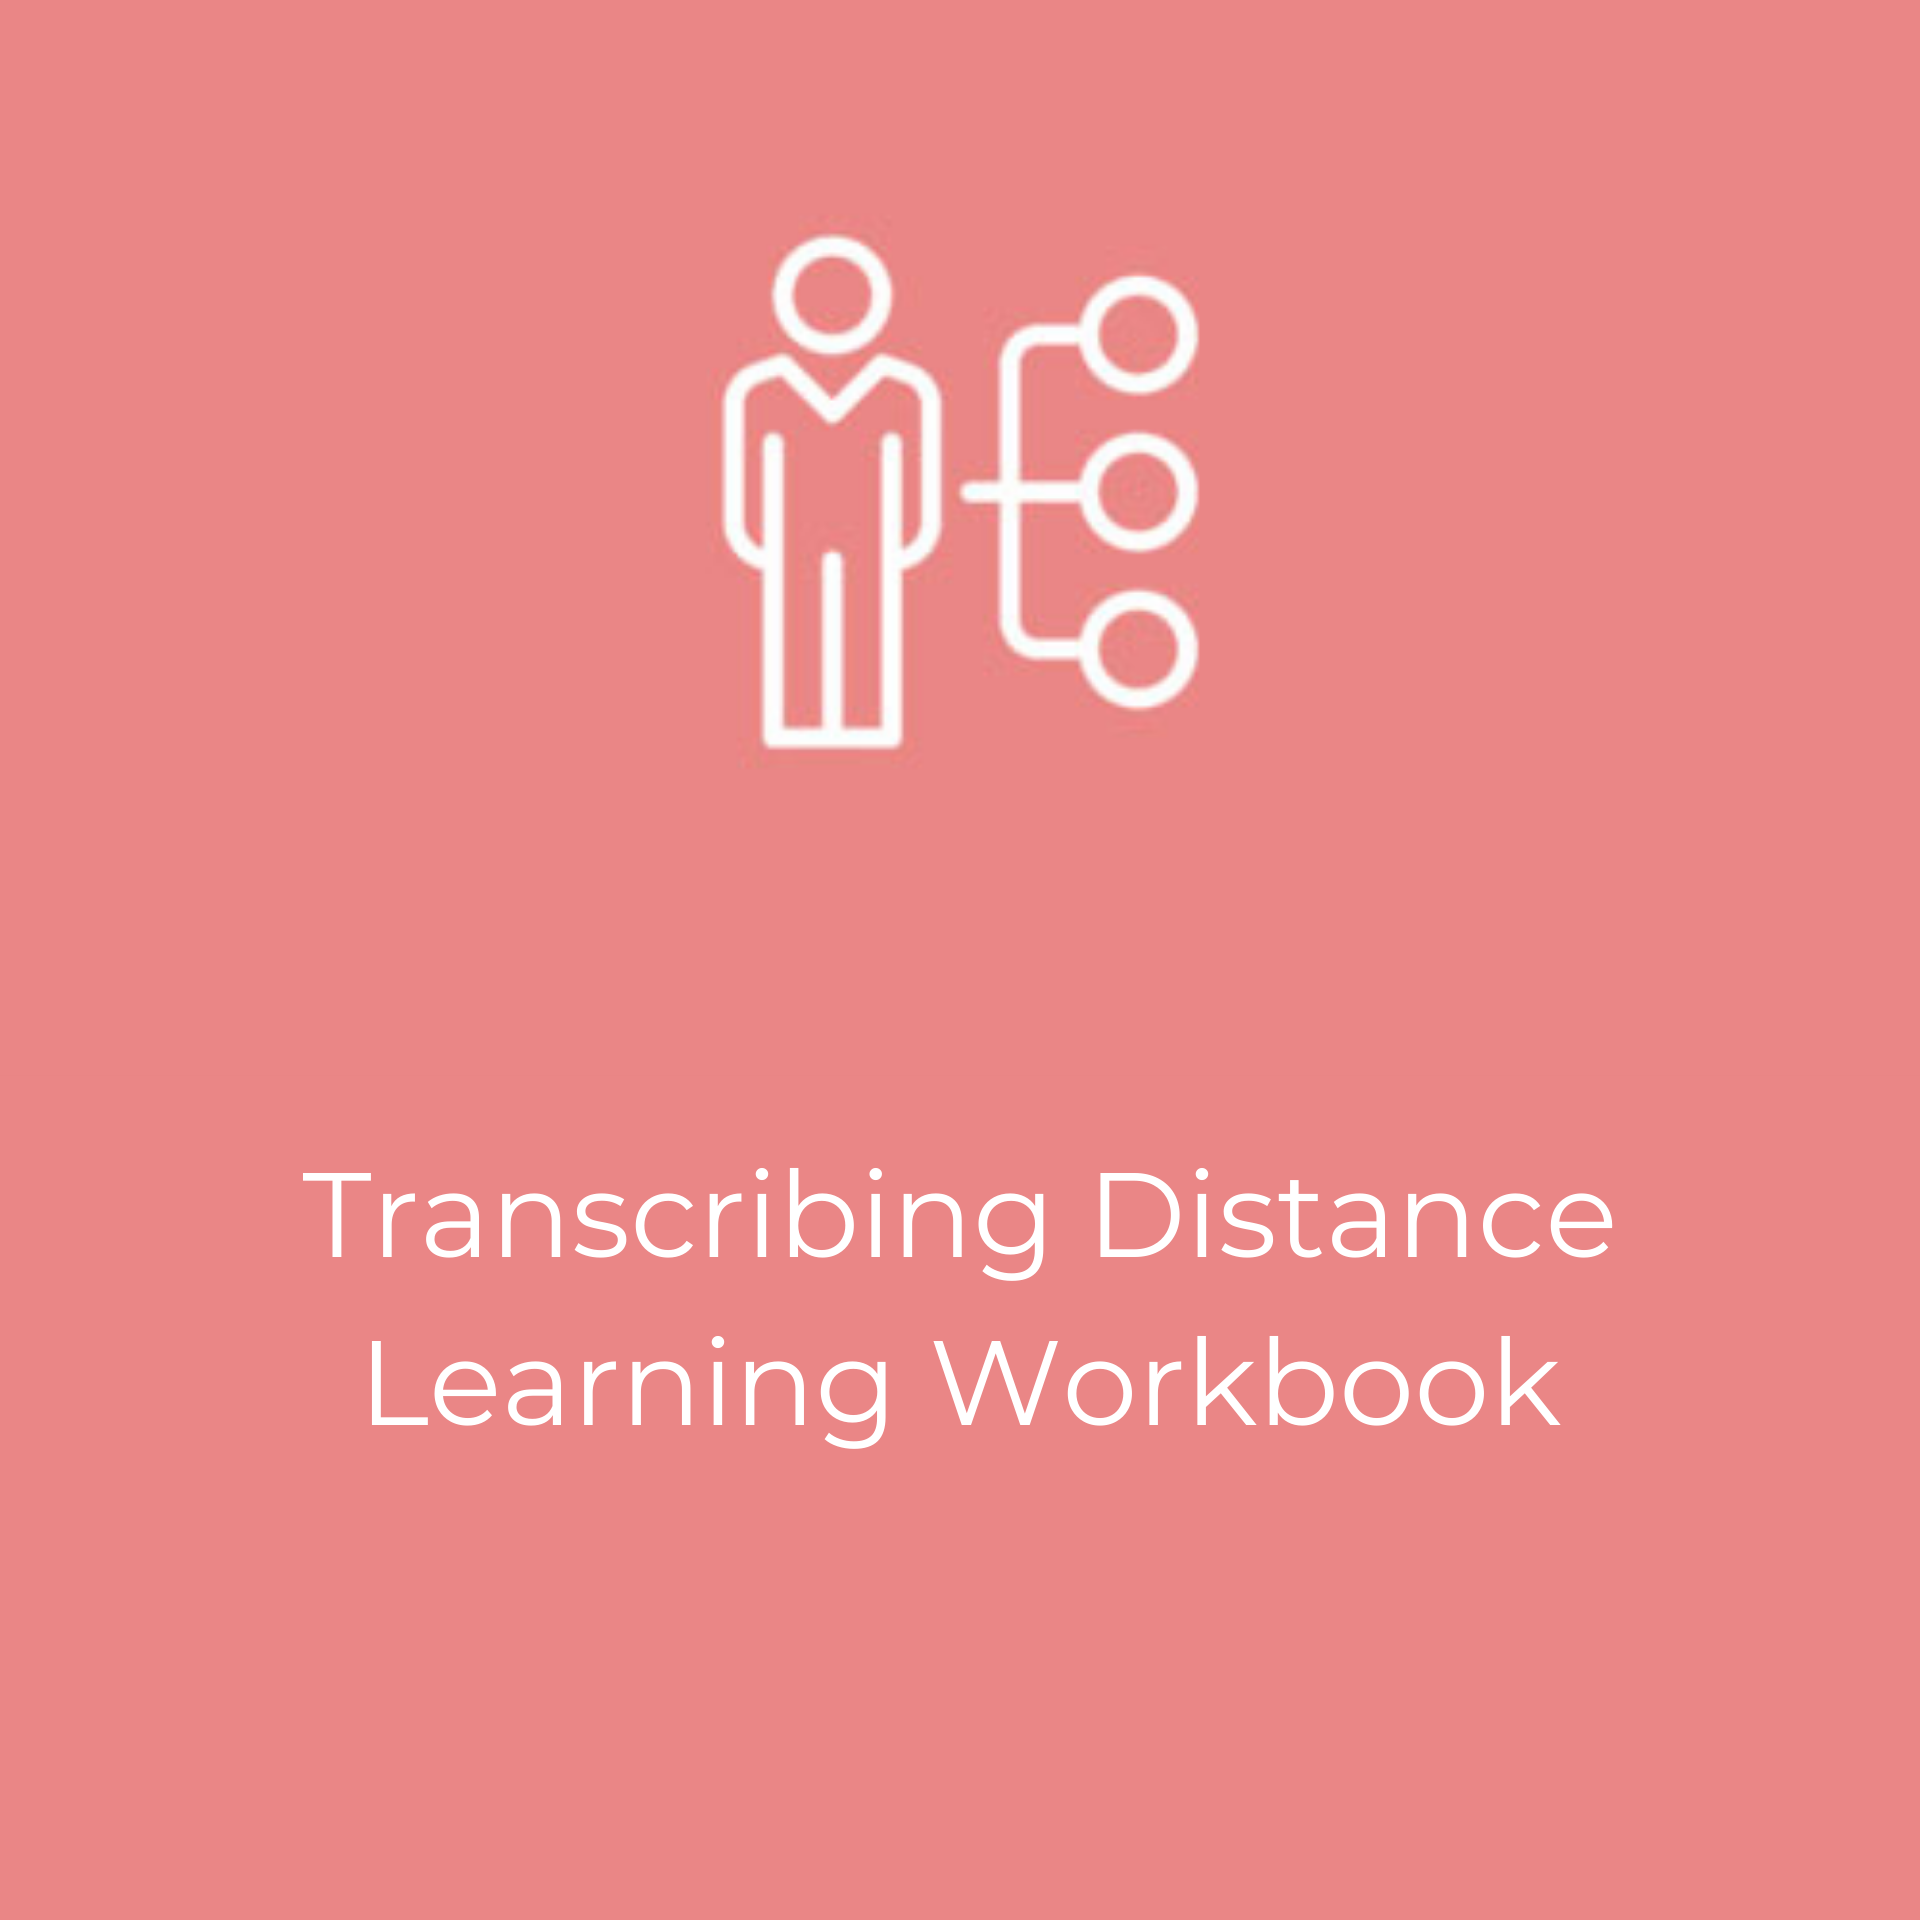 Transcribing Distance Learning Workbook